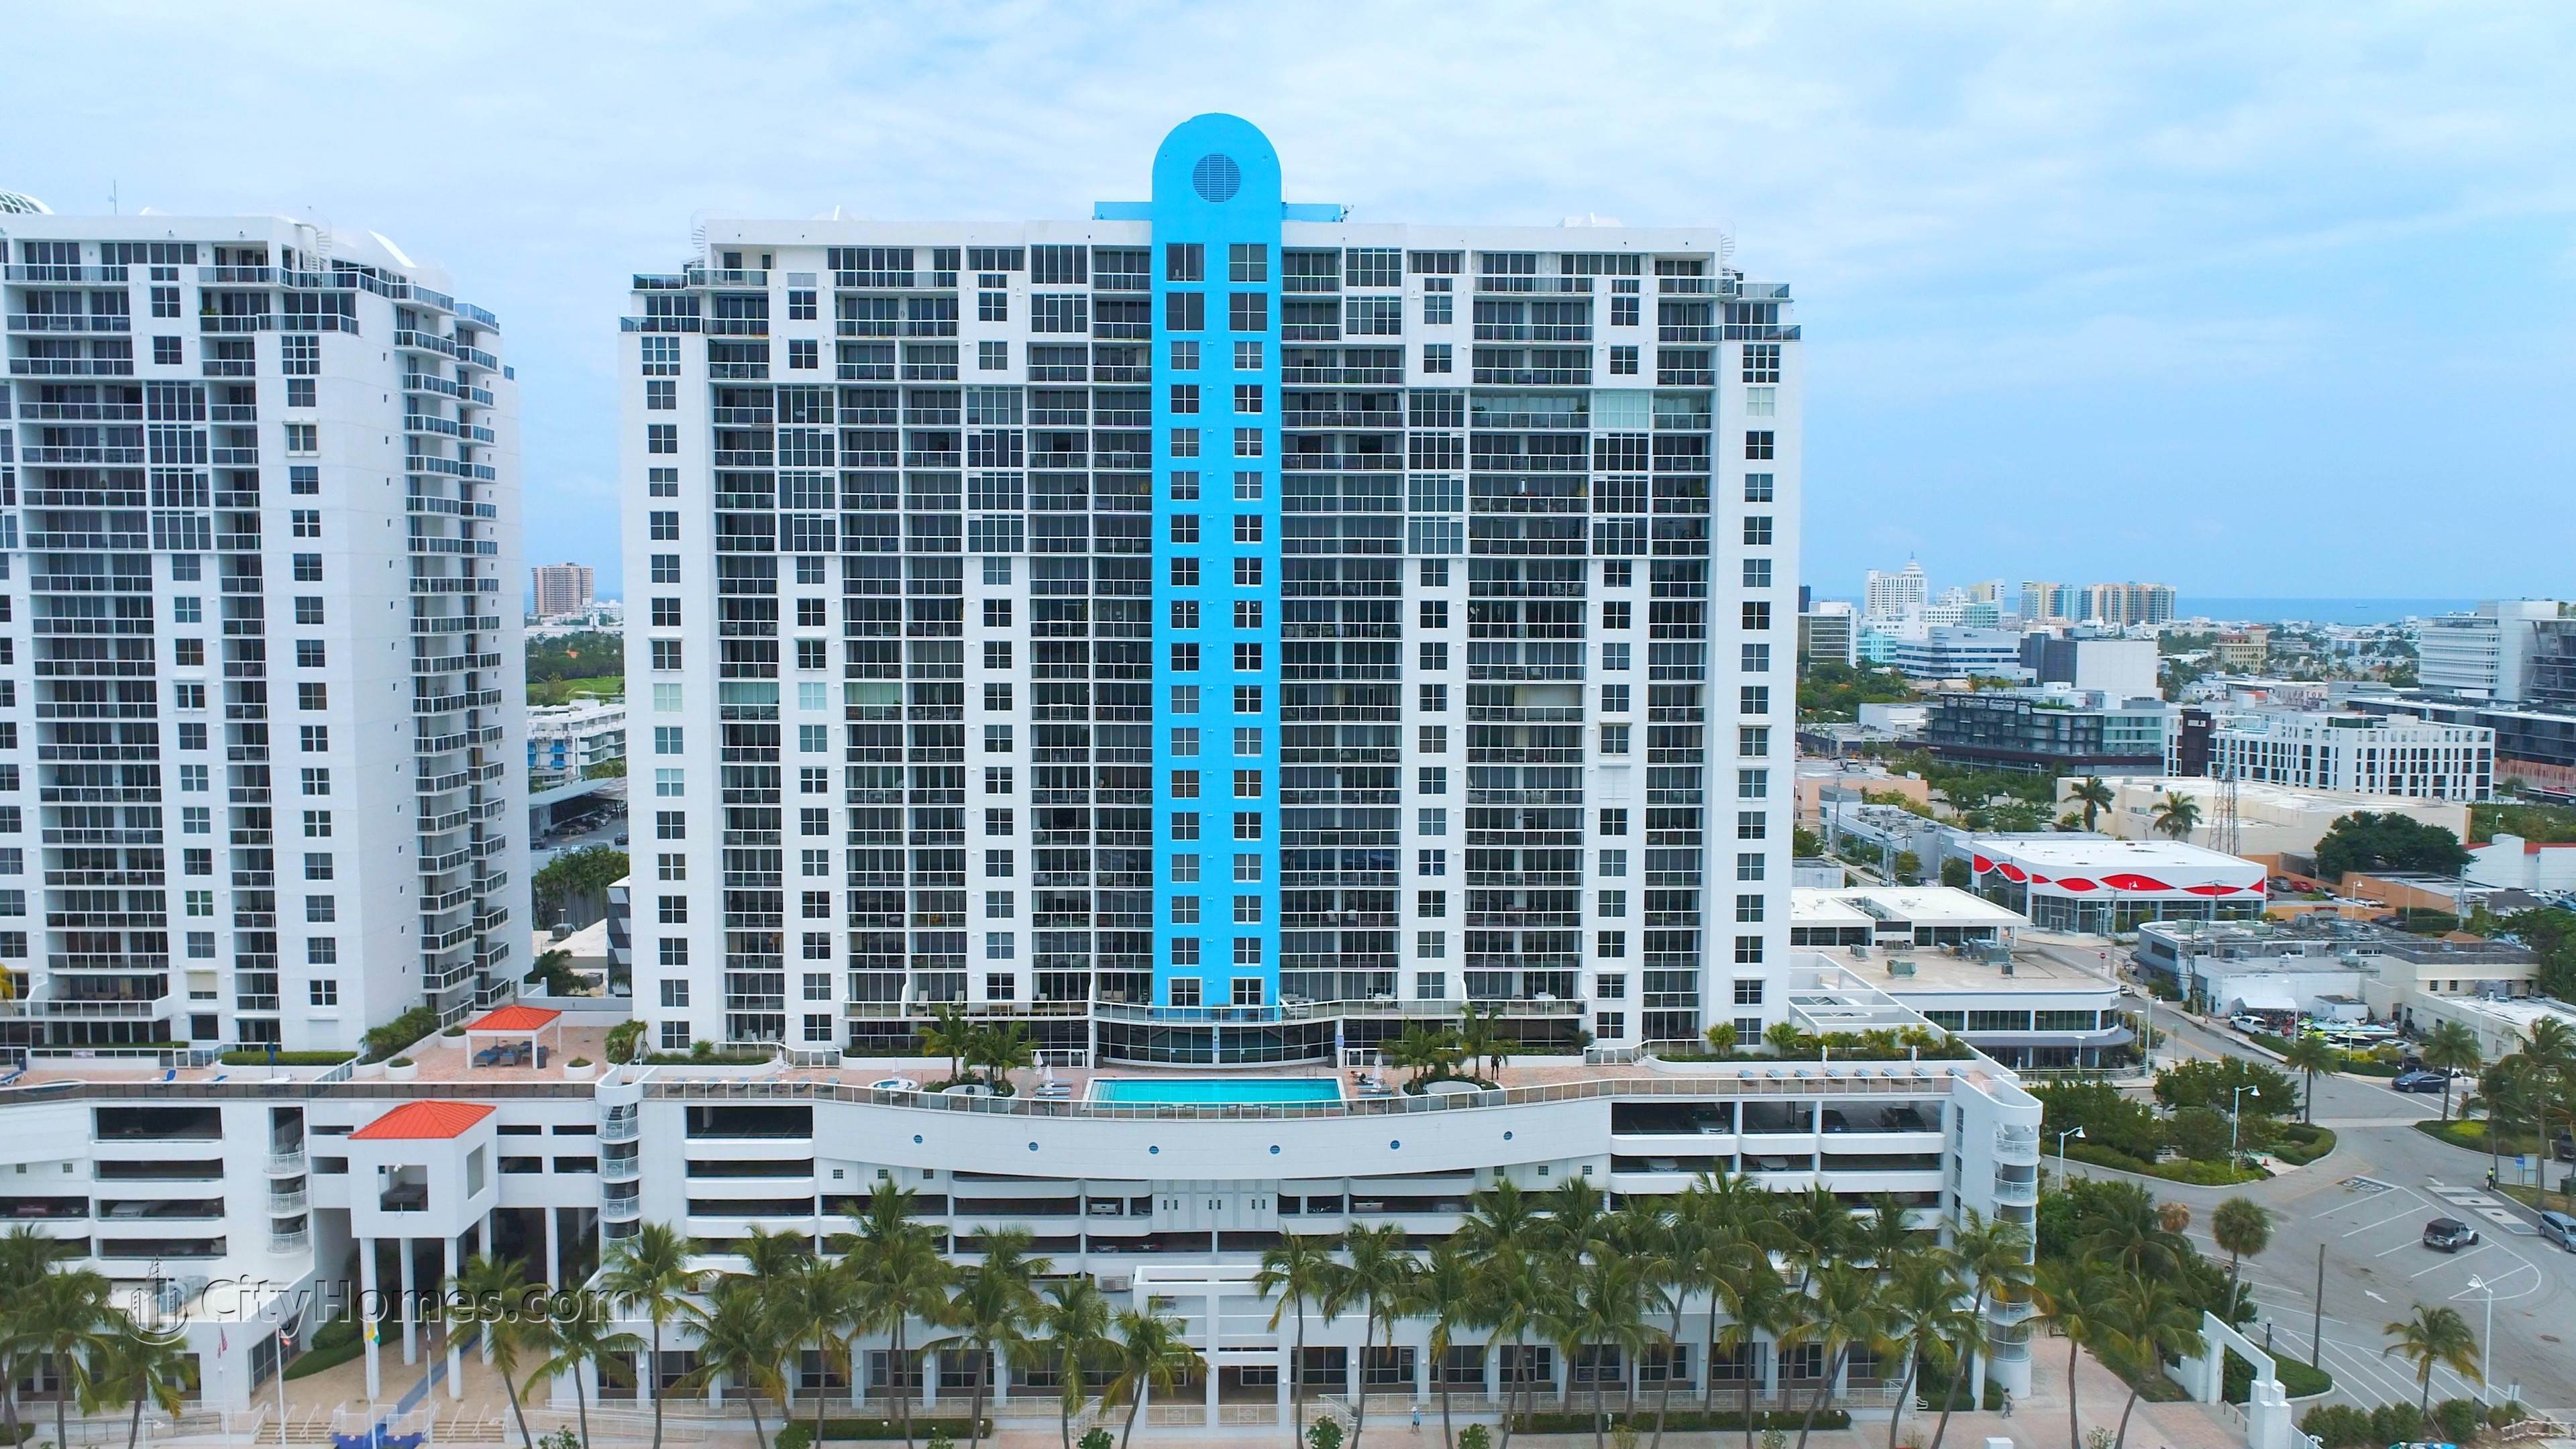 SUNSET HARBOUR SOUTH gebouw op 1800 Sunset Harbour Drive, Mid Beach, Miami Beach, FL 33139